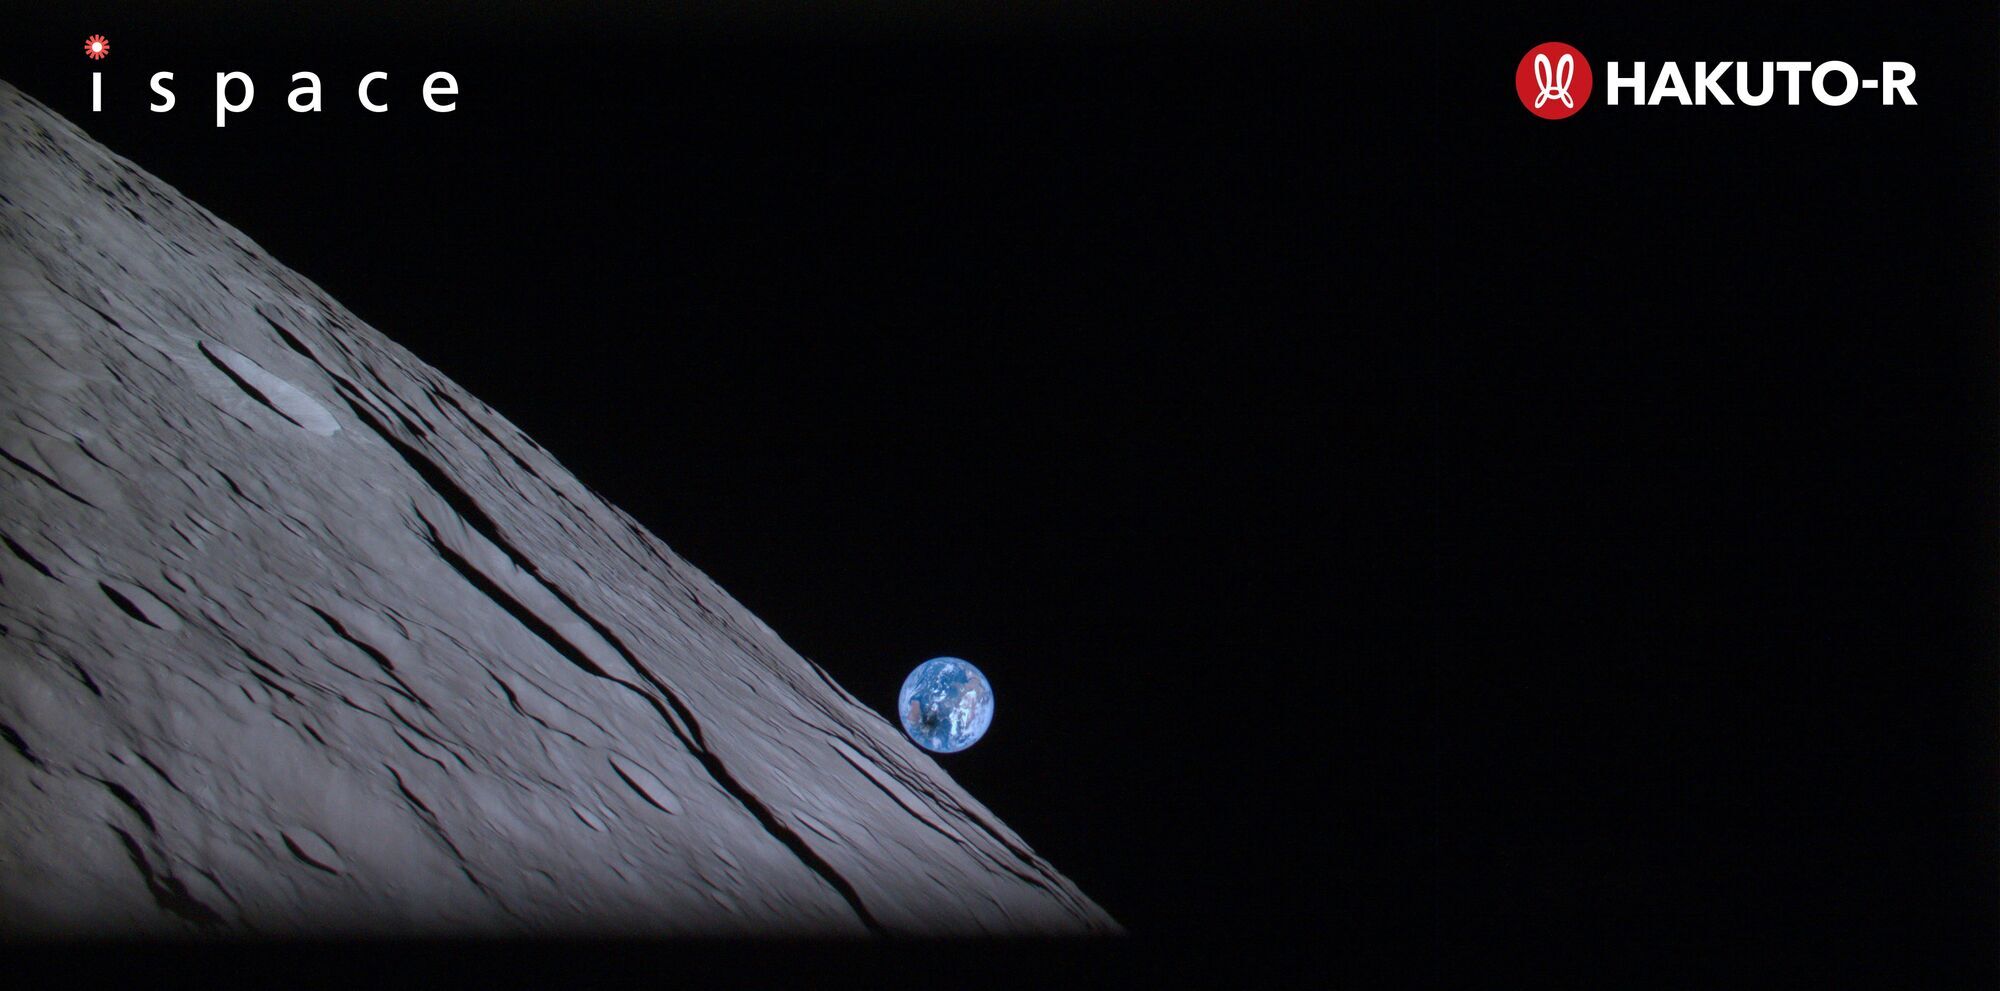 Фото Земли с тенью от Луны, сделанное Hakuto-R.